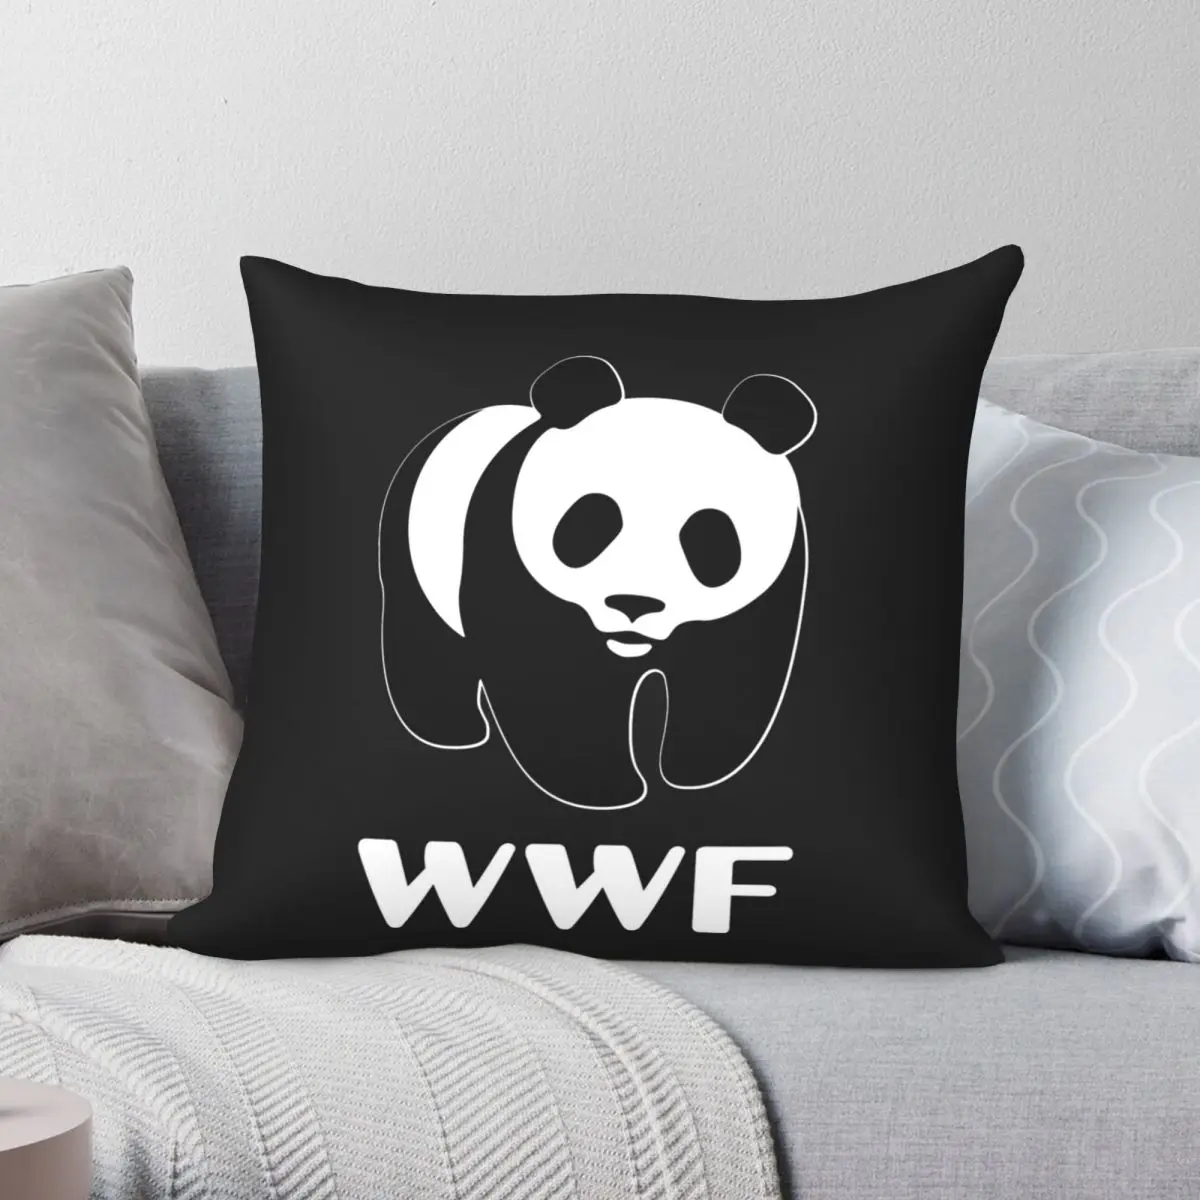 World Wildlife Fund 2 Square Pillowcase Polyester Linen Velvet Printed Zip Decor Bed Cushion Cover